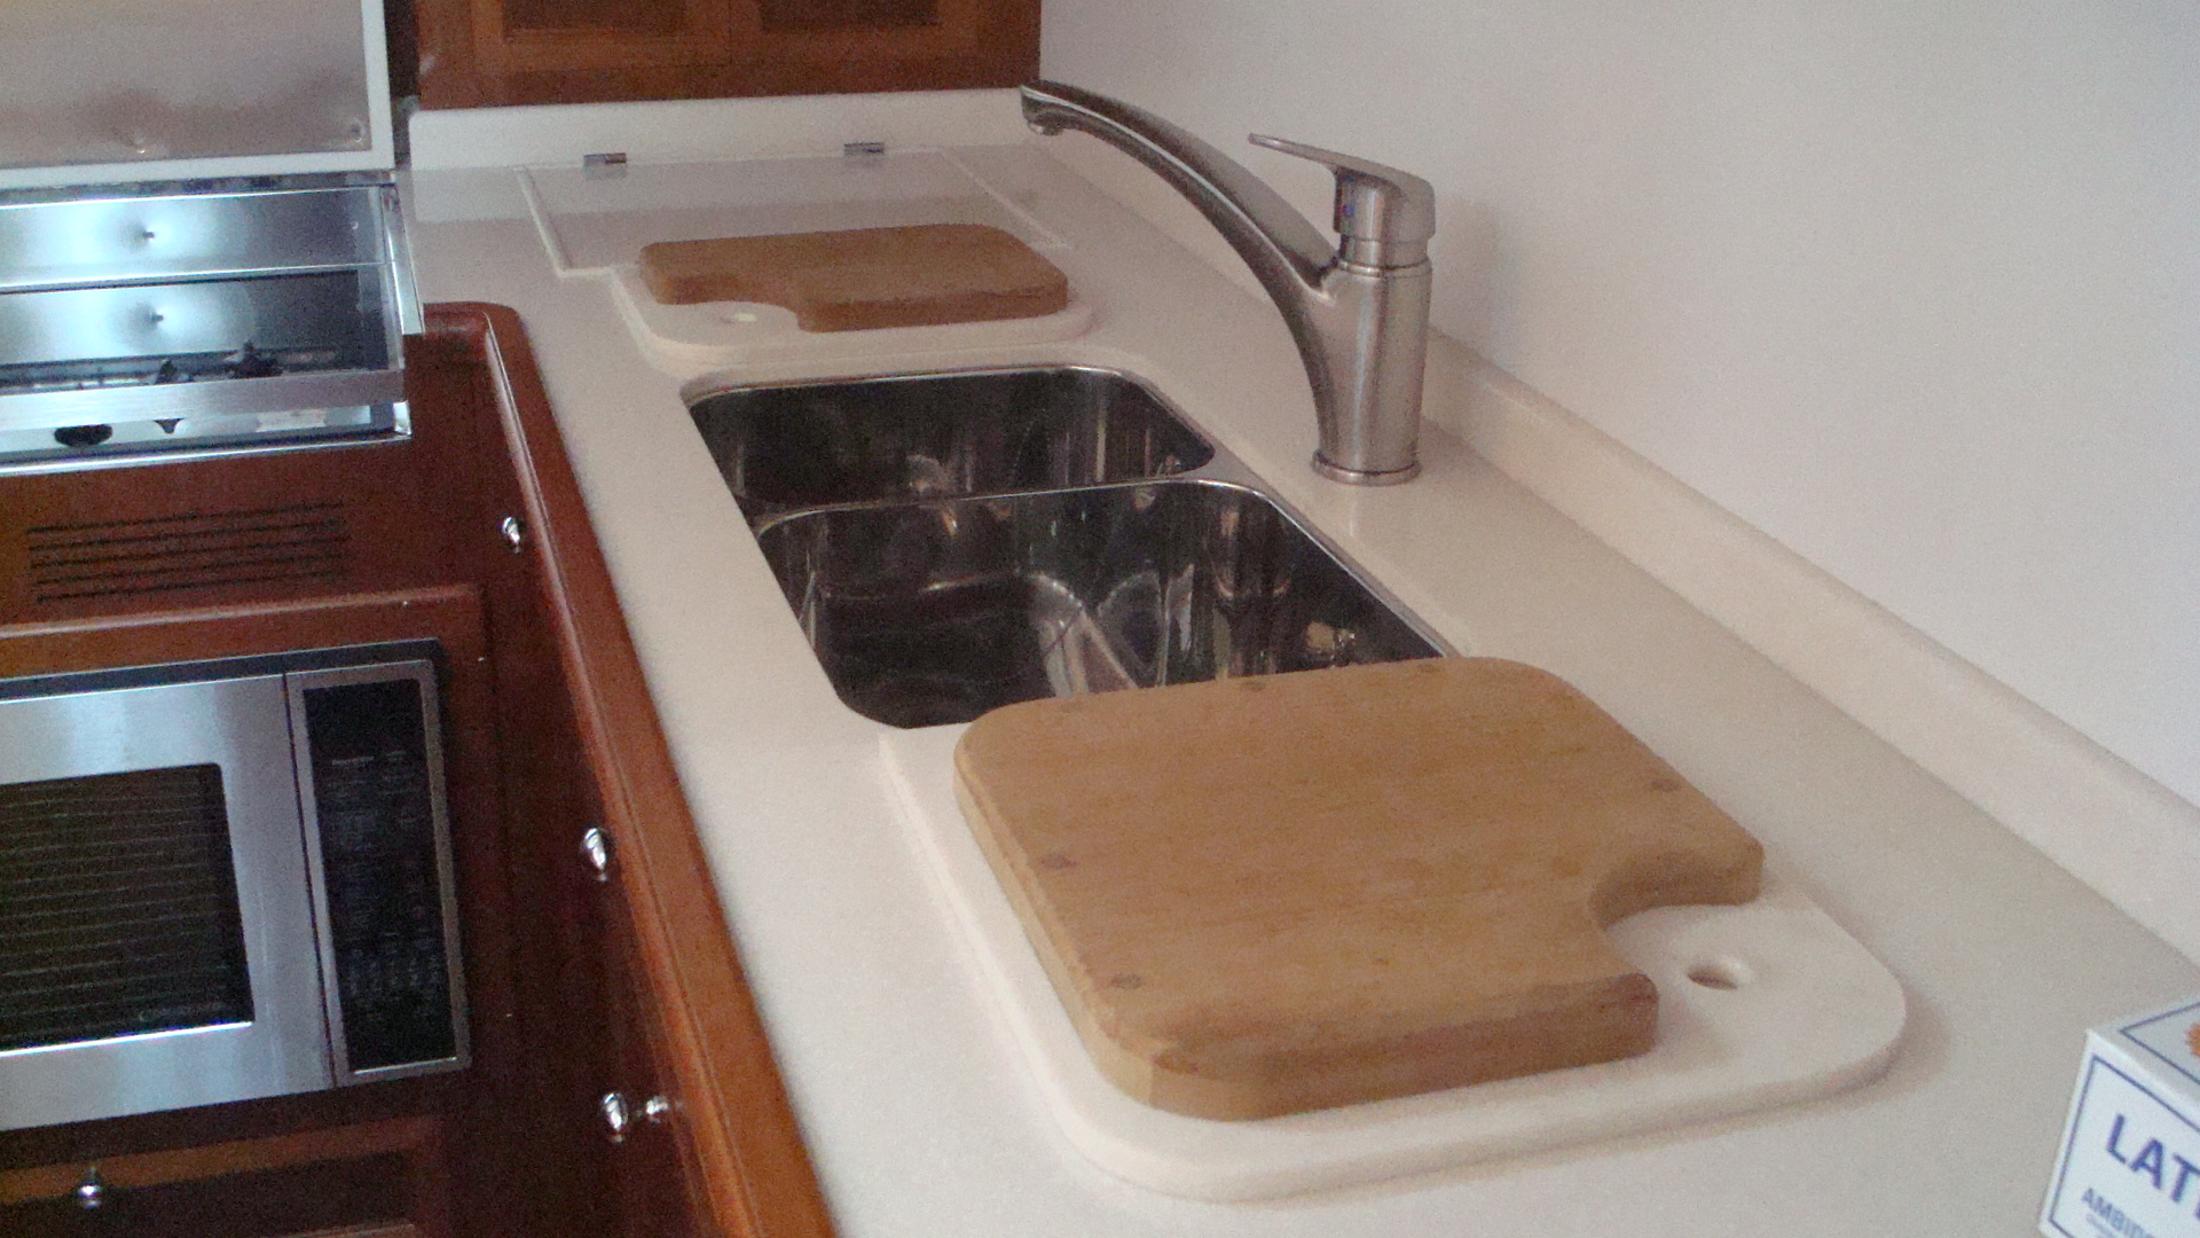 Sink with Corian/Cutting Board Inserts